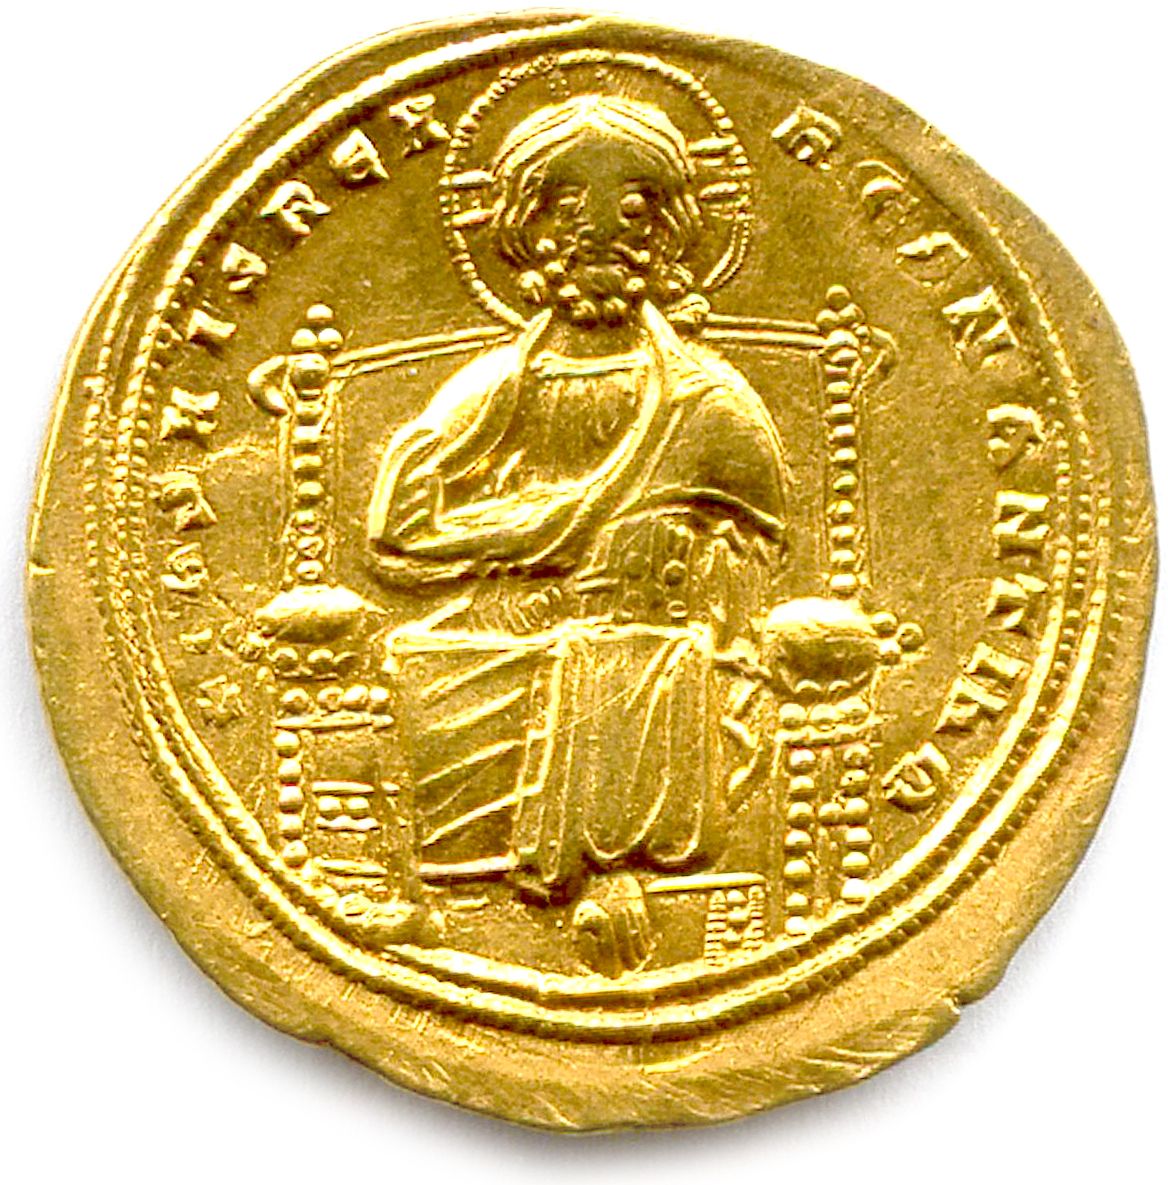 Null ROMANO III ARGYRA 12 novembre 1028 - 11 aprile 1034

IhS XIS REX REGNANTInm&hellip;